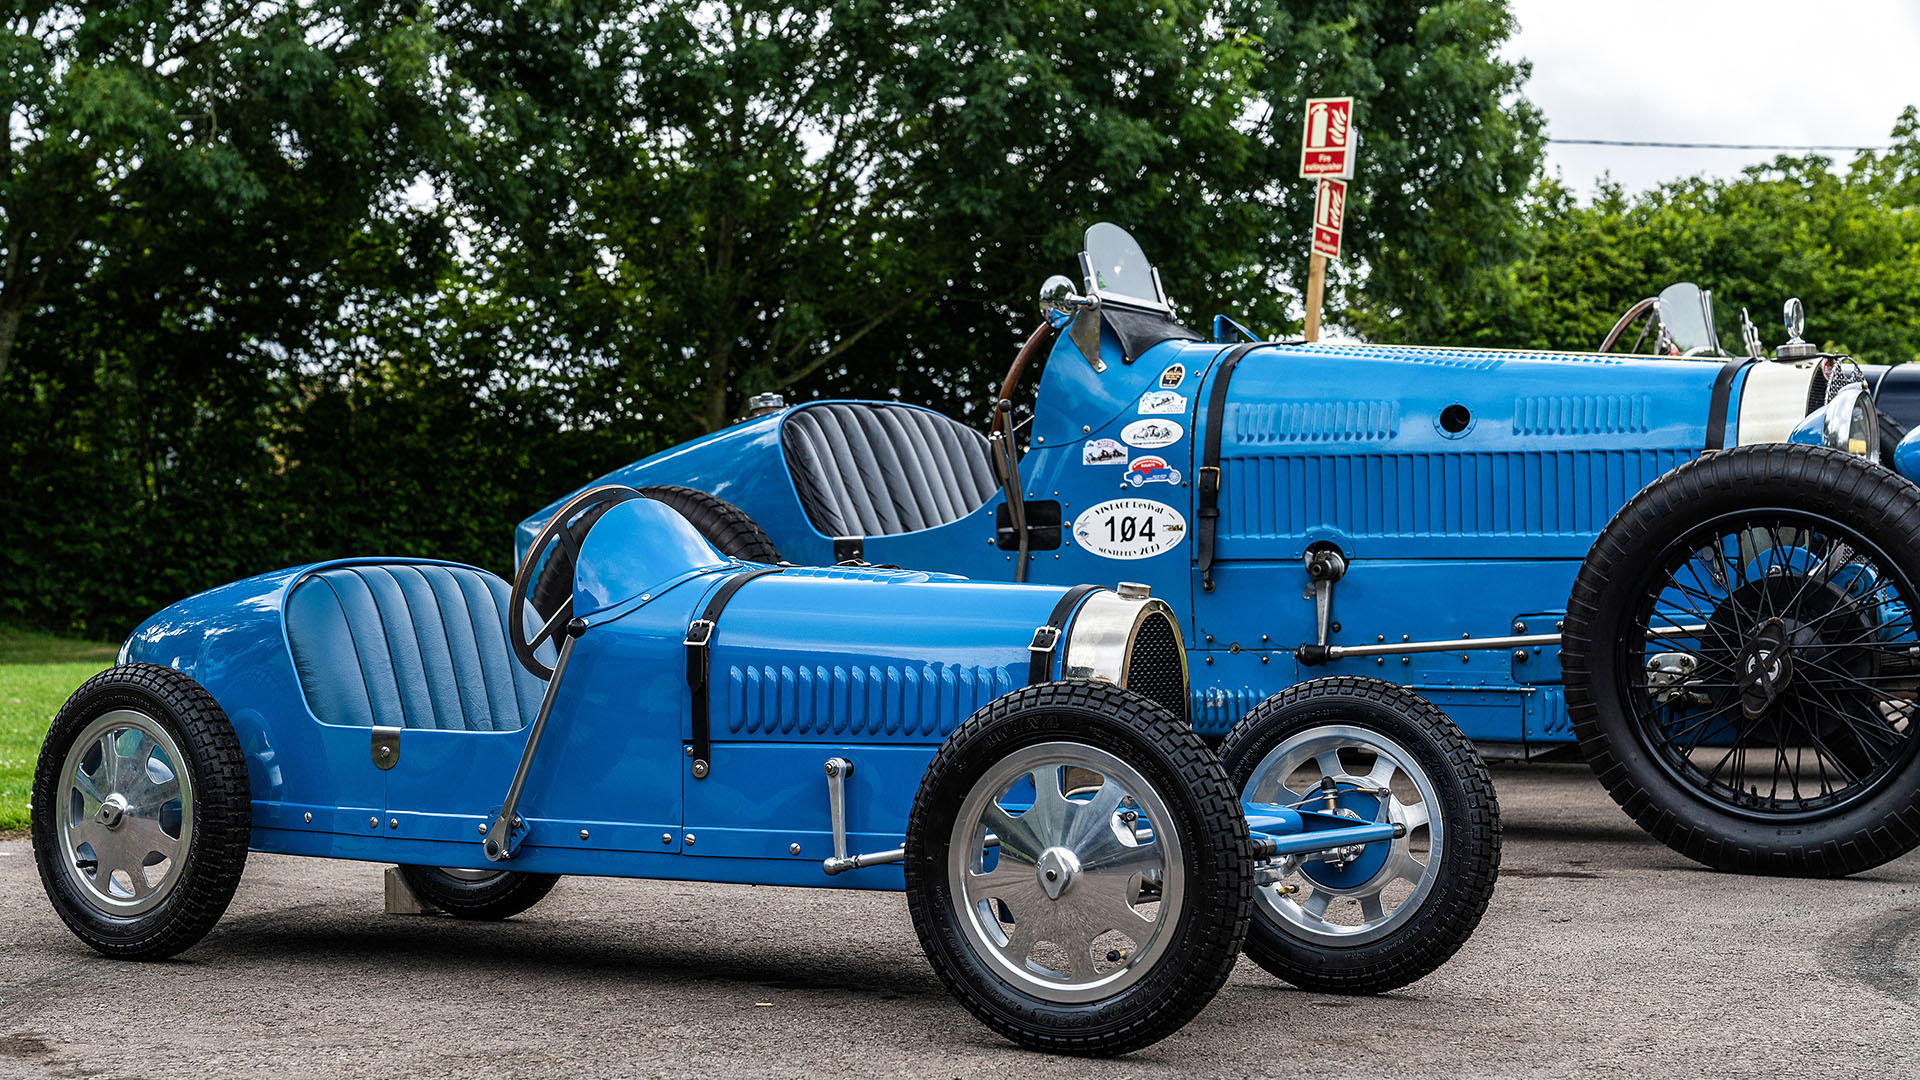 The Spiritual in England Home of Bugatti